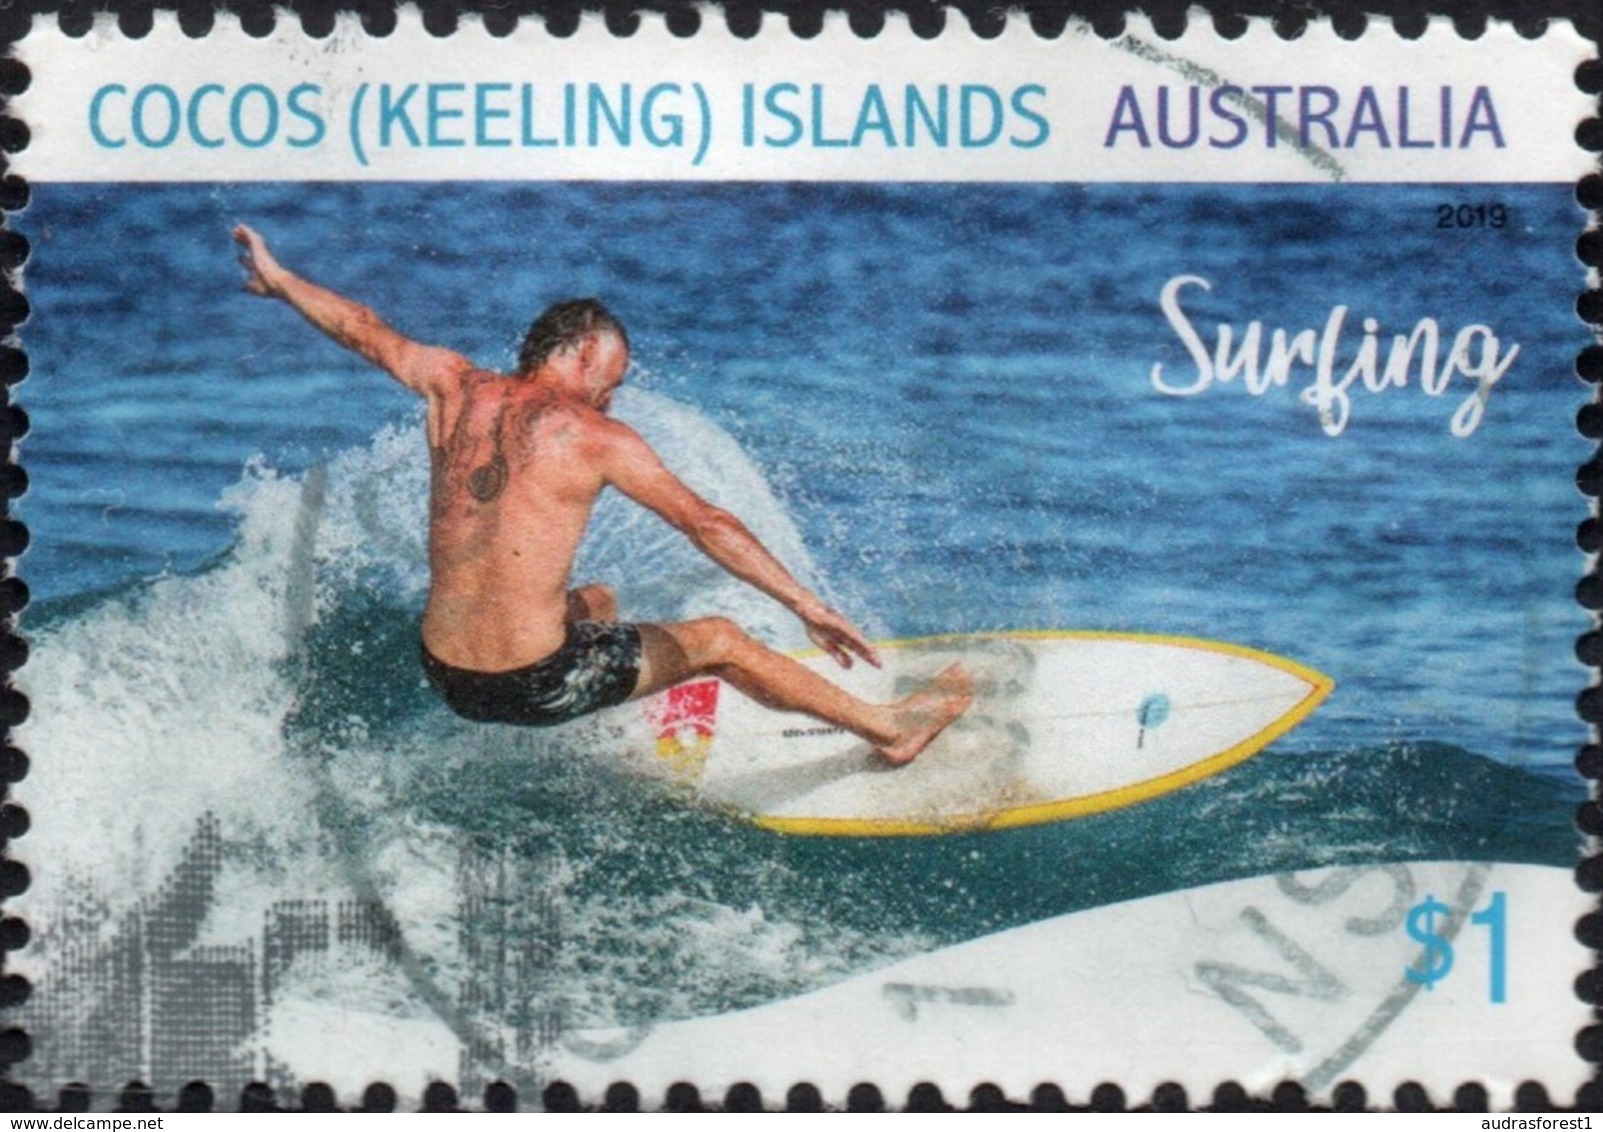 2019 COCOS KEELING ISLANDS $1 SURFING Very Fine POSTALLY USED Stamp - Cocos (Keeling) Islands